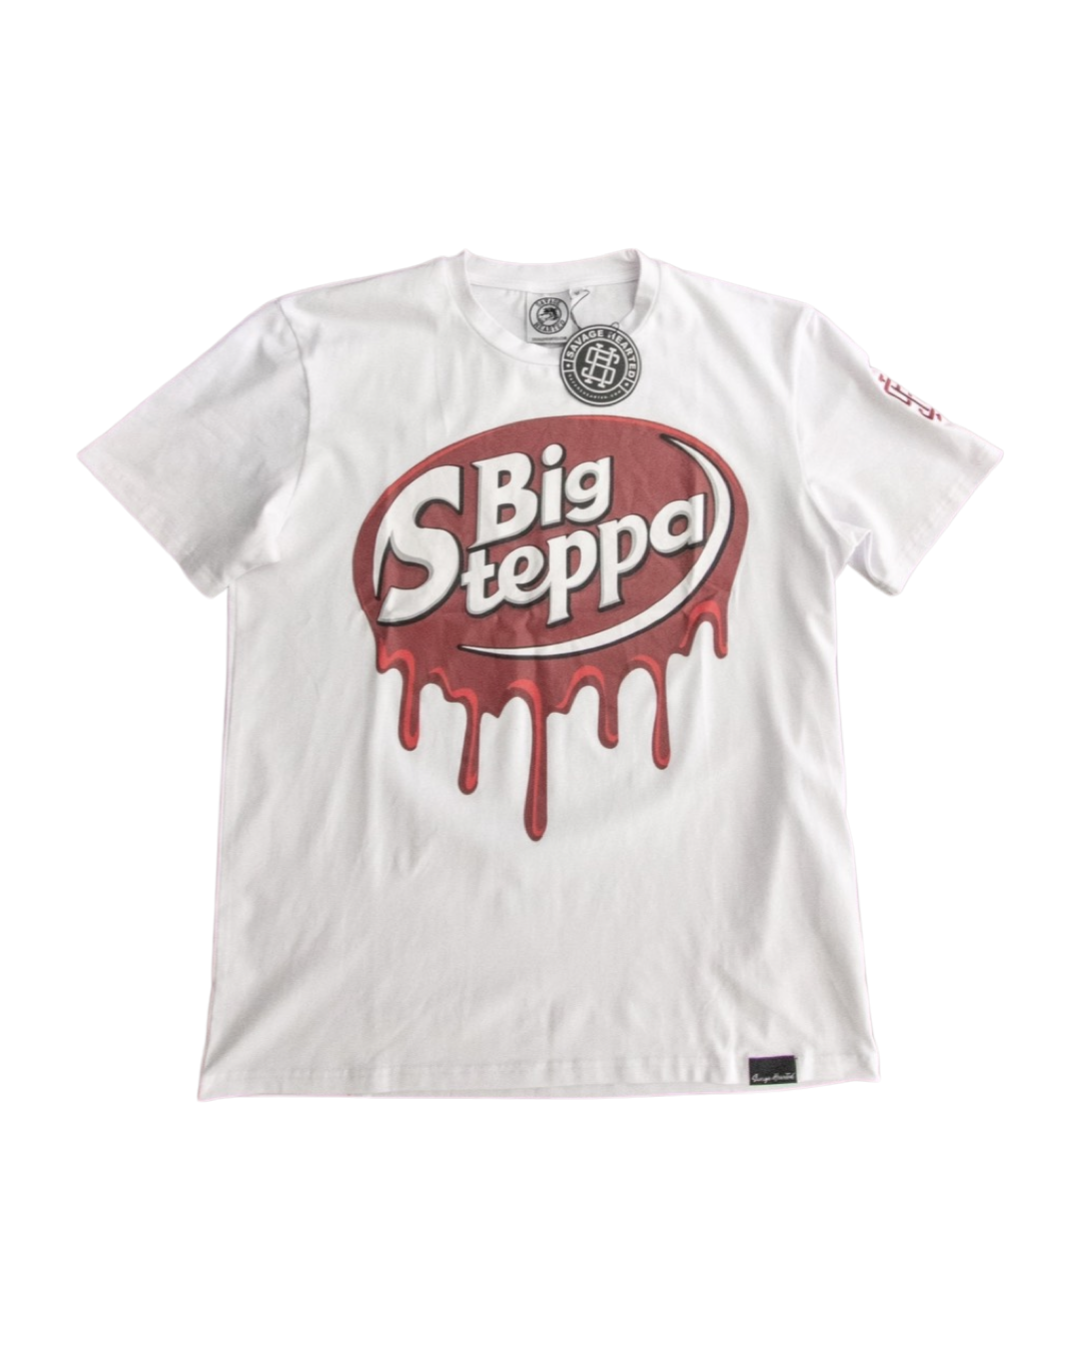 Big Steppa Shirt